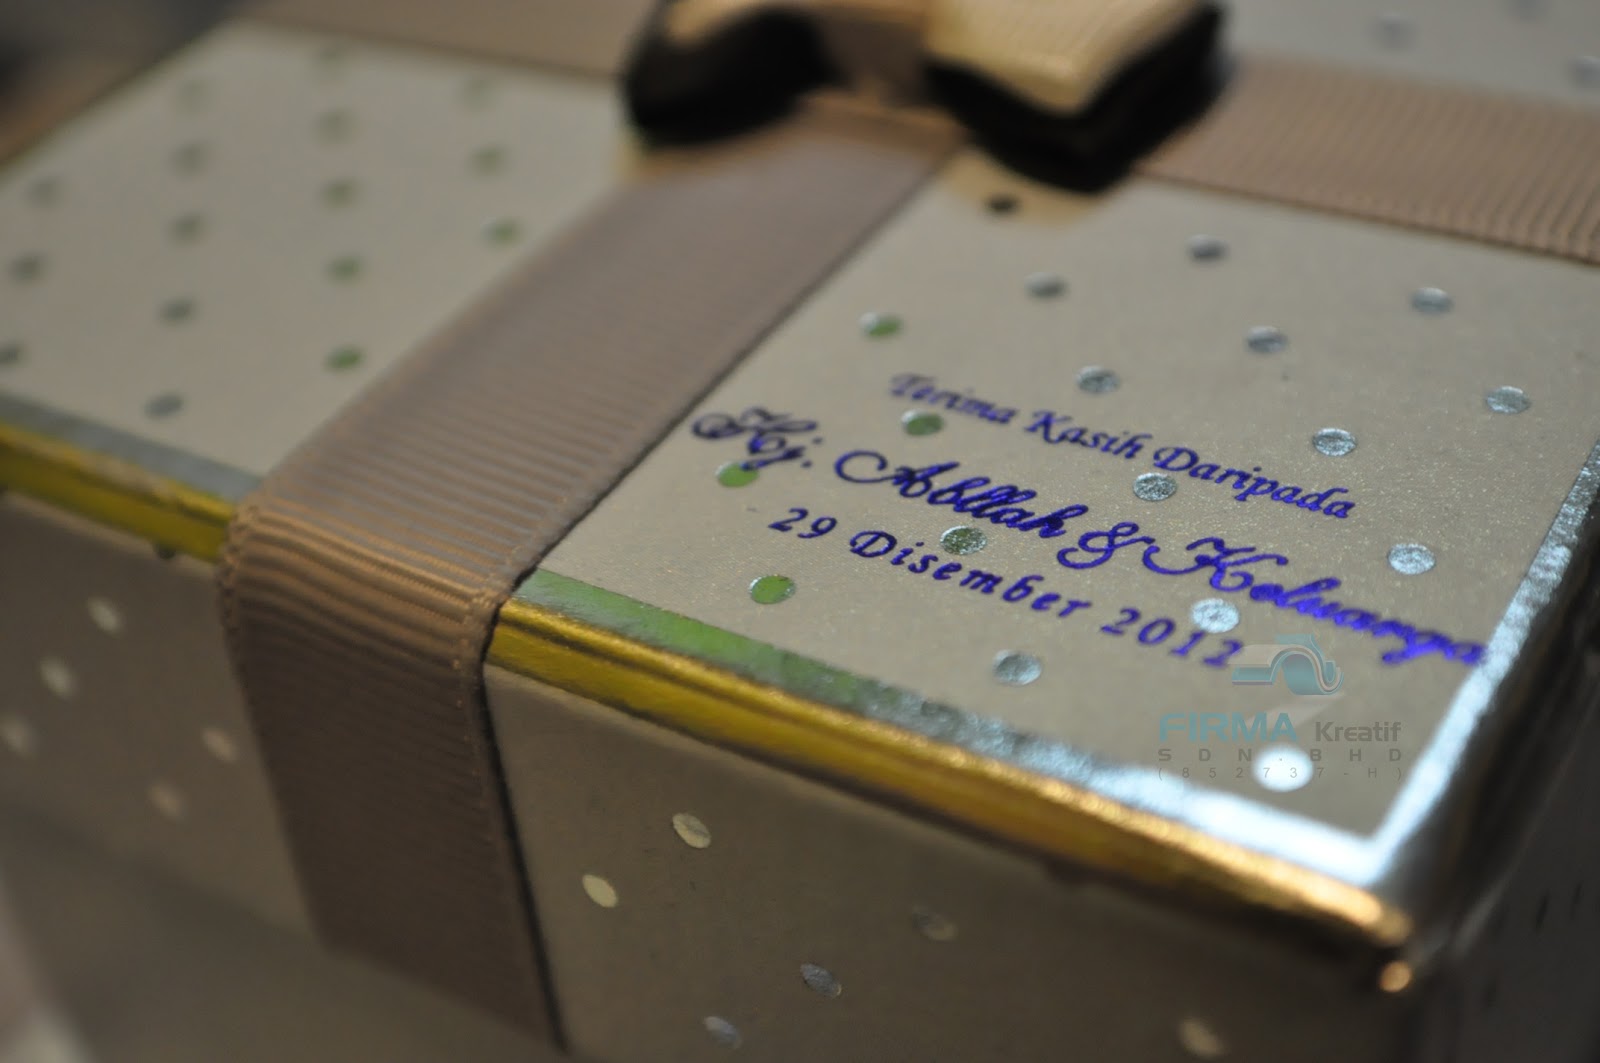 Firma Kreatif Sdn Bhd: Gift Box - Nazrul & Izmira